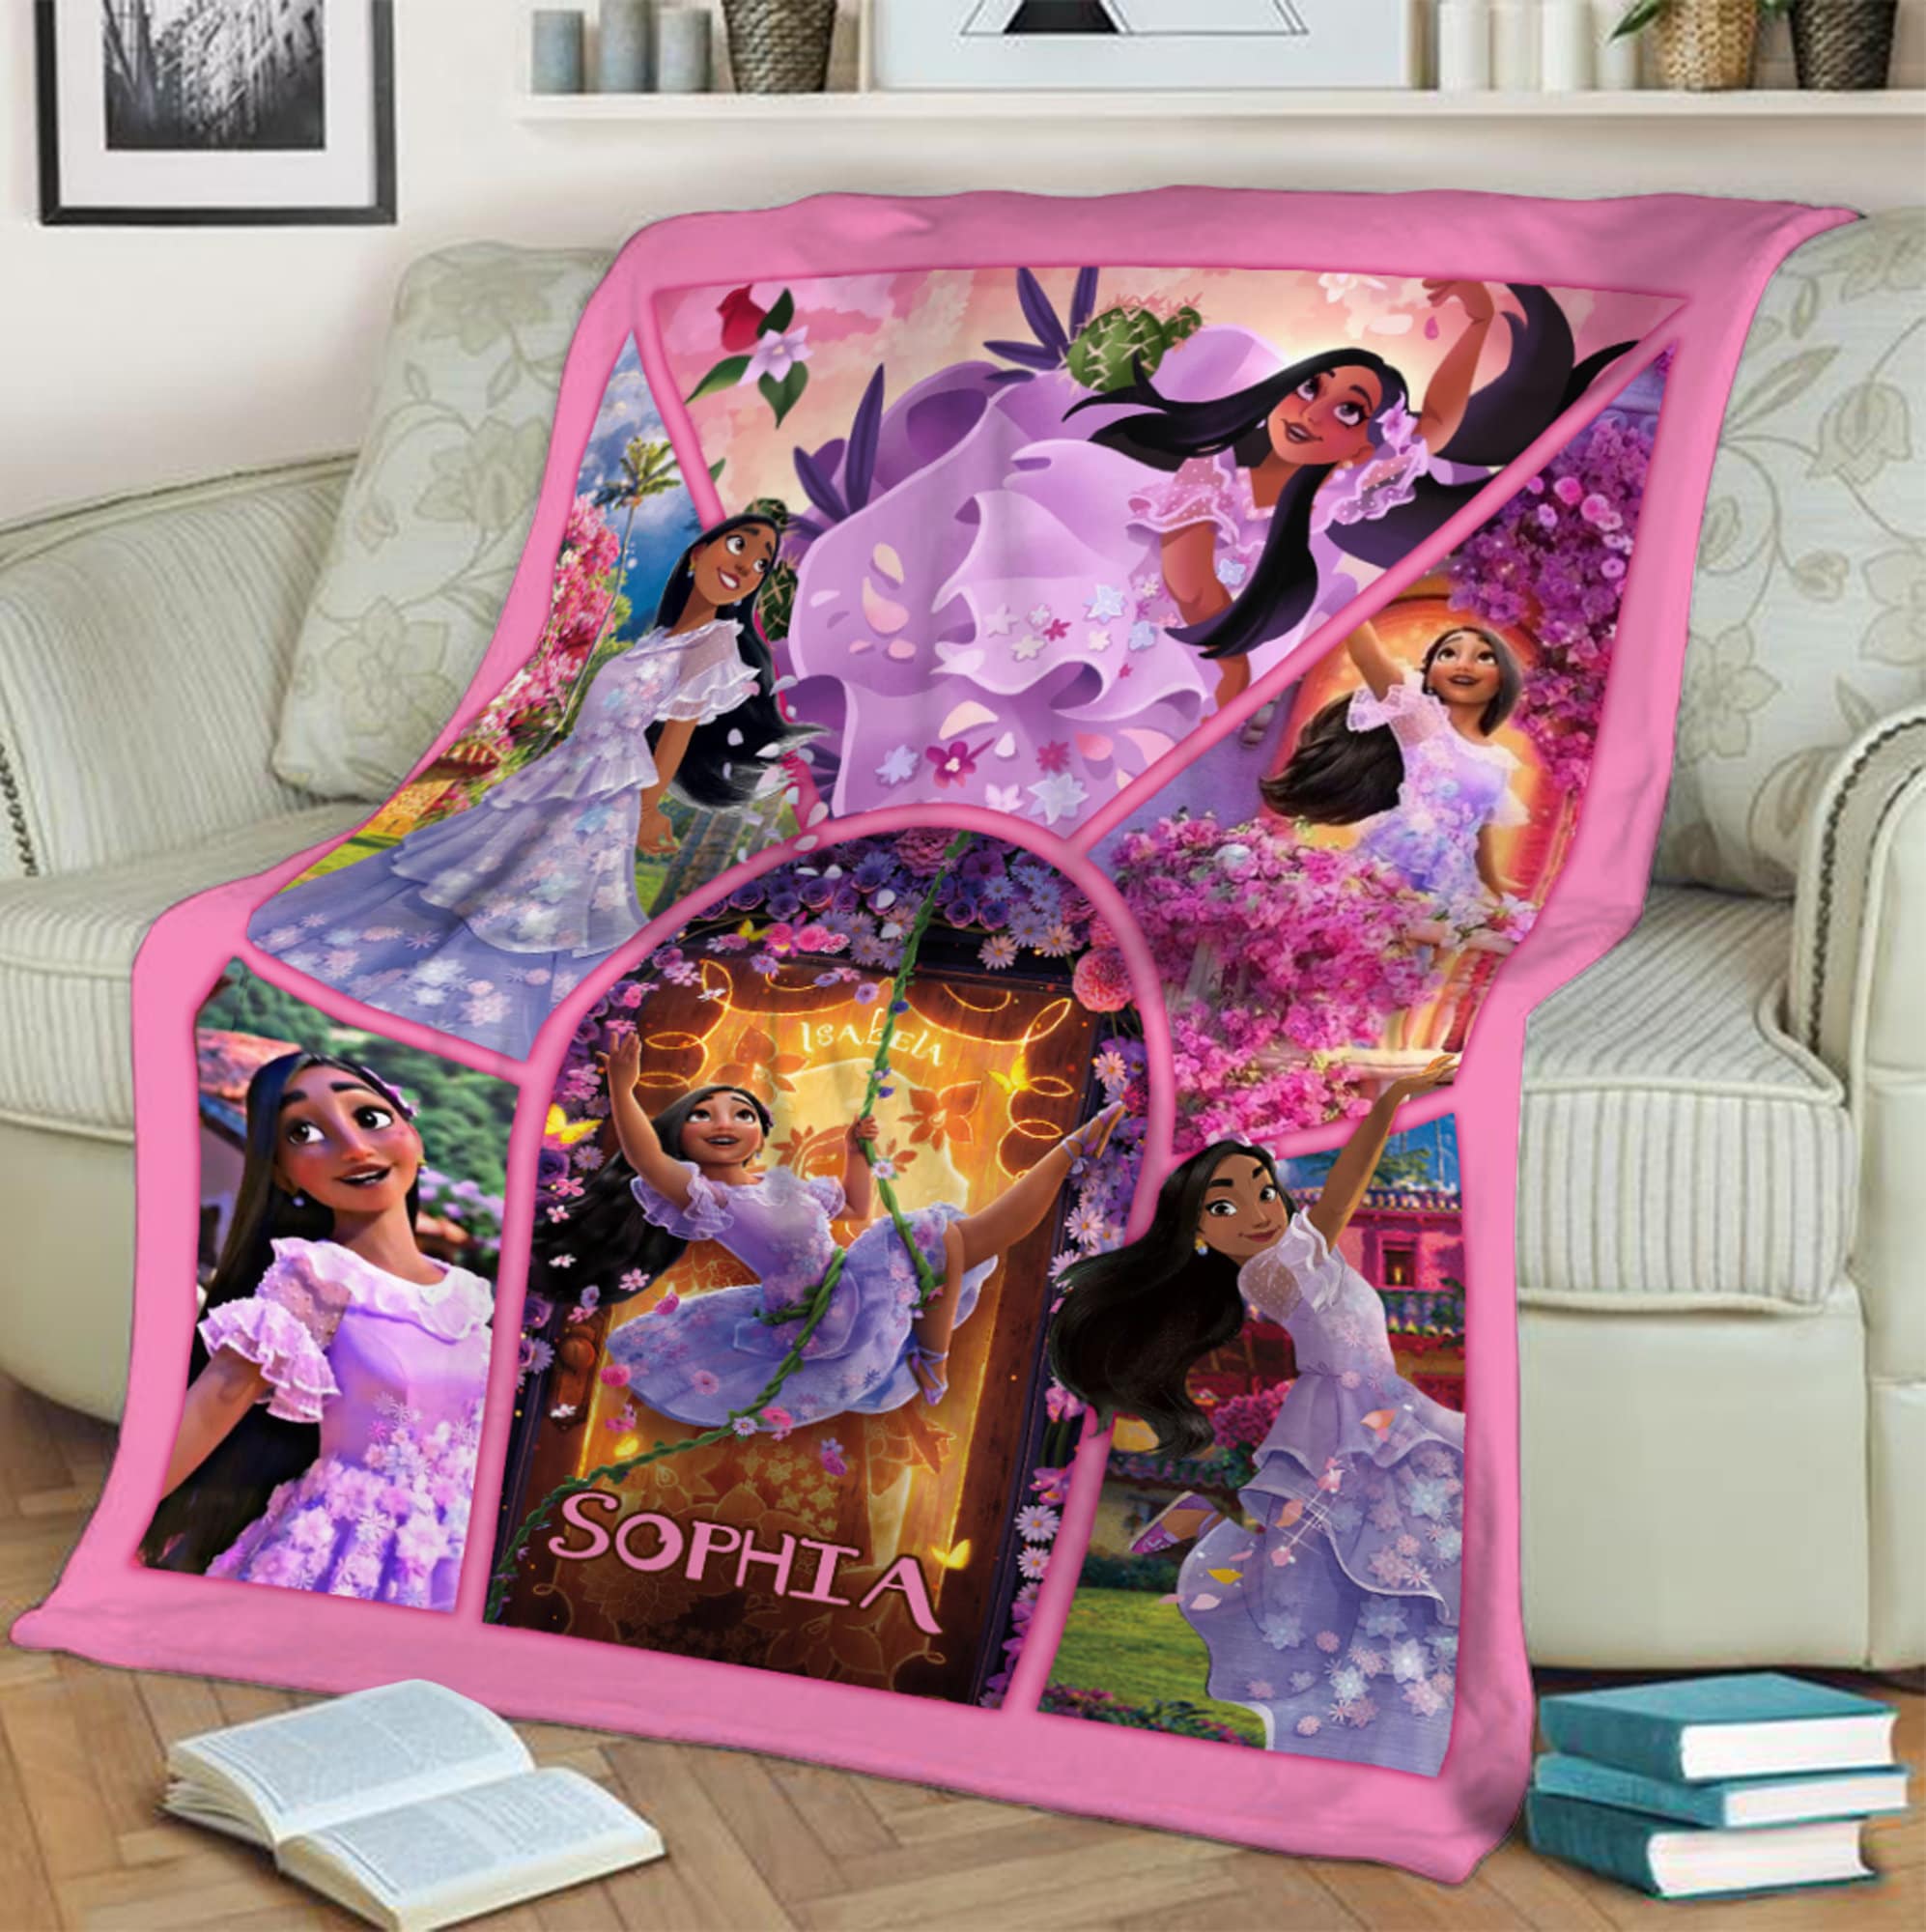 Northwest Disney's Encanto Pillow, 18 x 18, Perfect Isabella